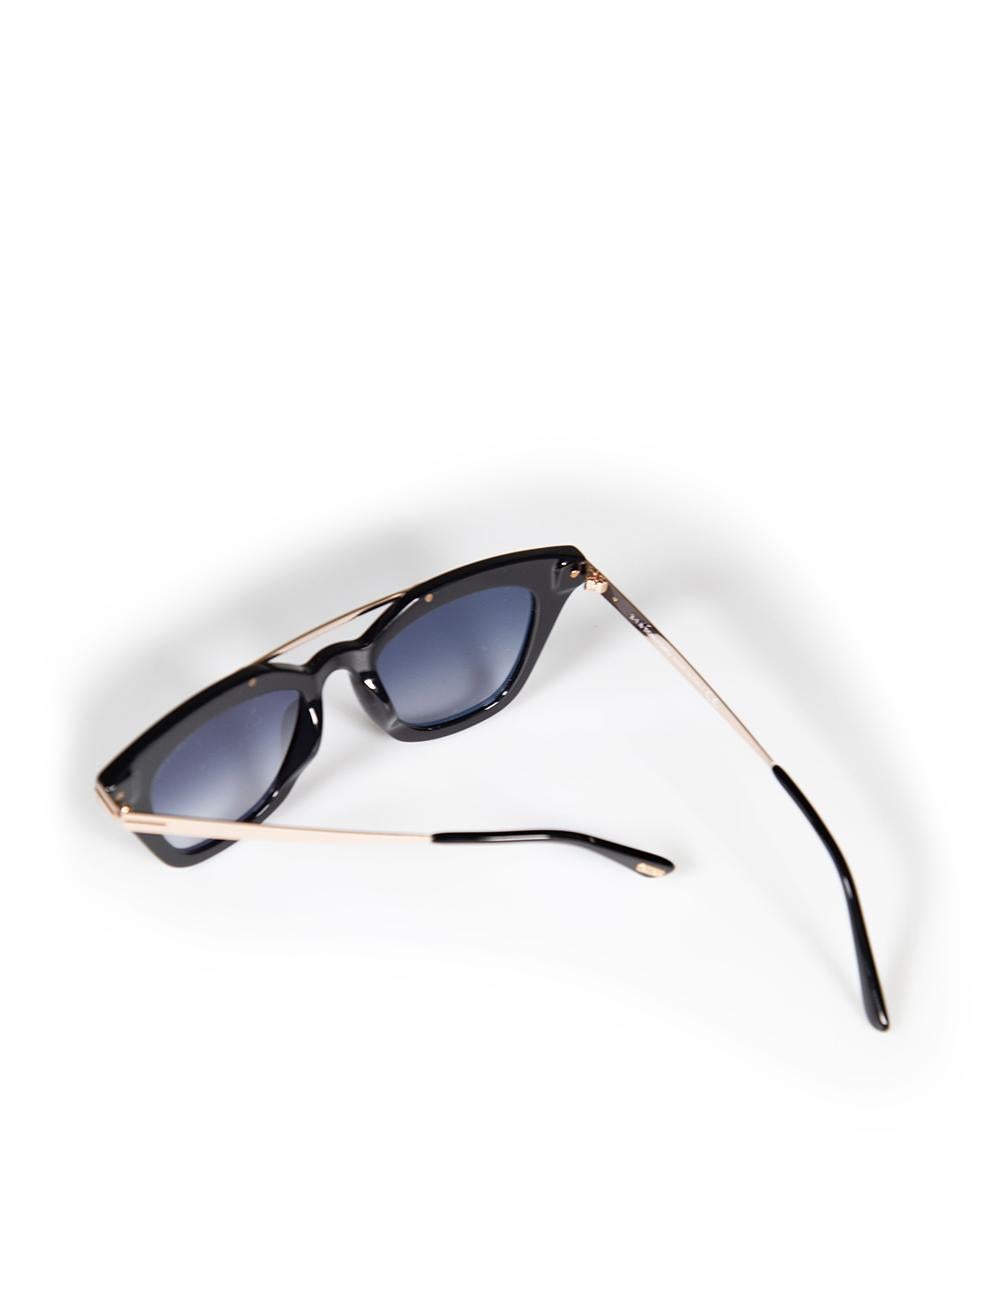 Tom Ford Shiny Black Anna Square Sunglasses For Sale 3